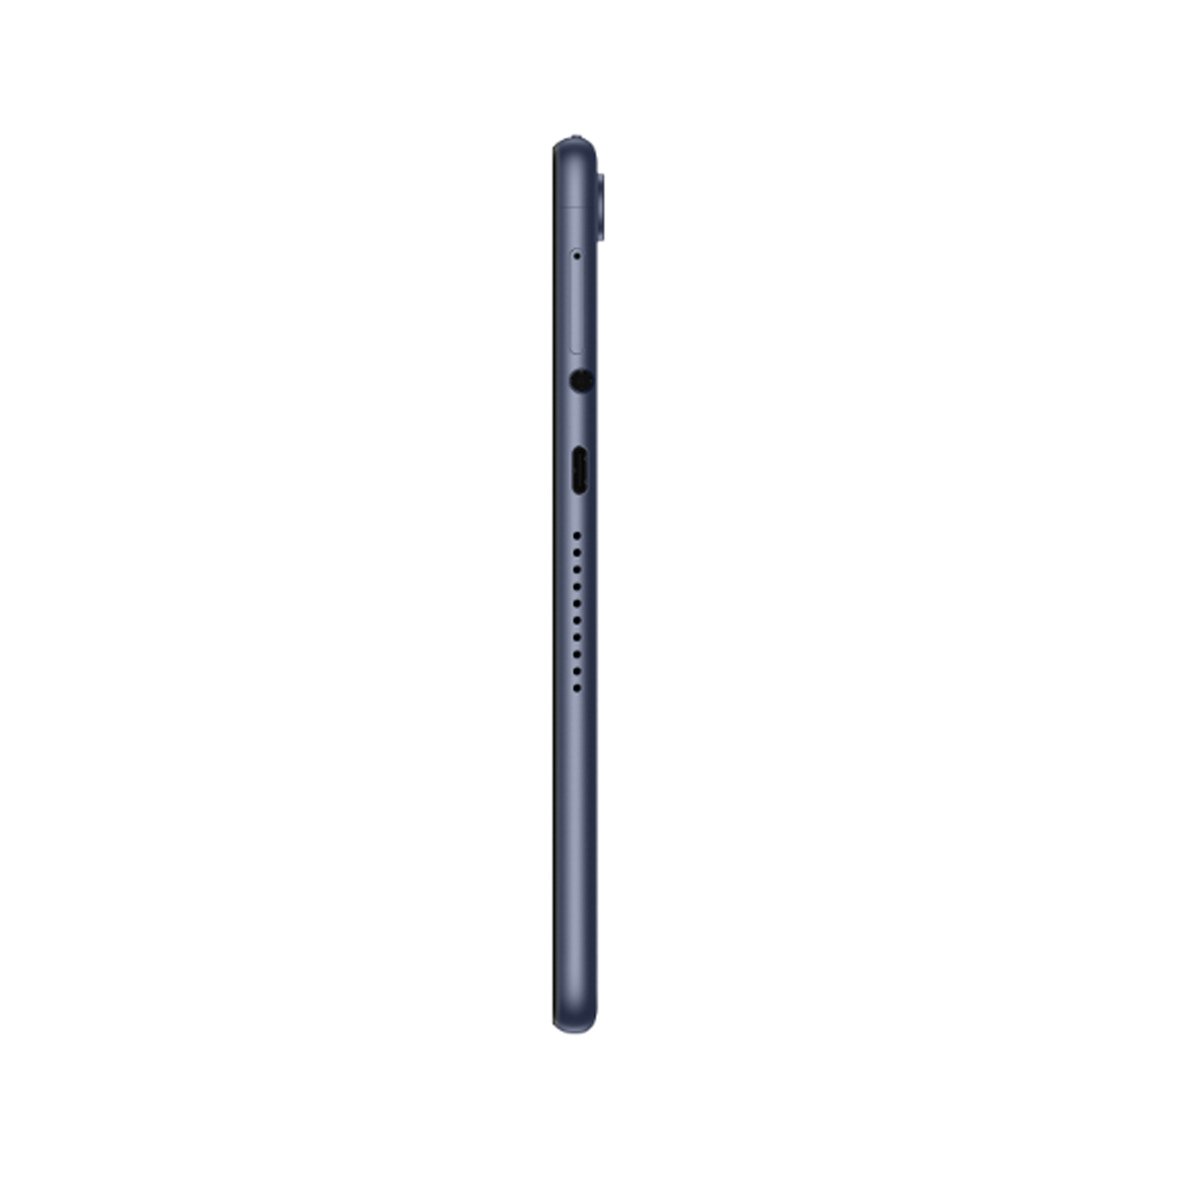 Huawei MatePad T10 S 10.1inch 32GB Dark Blue